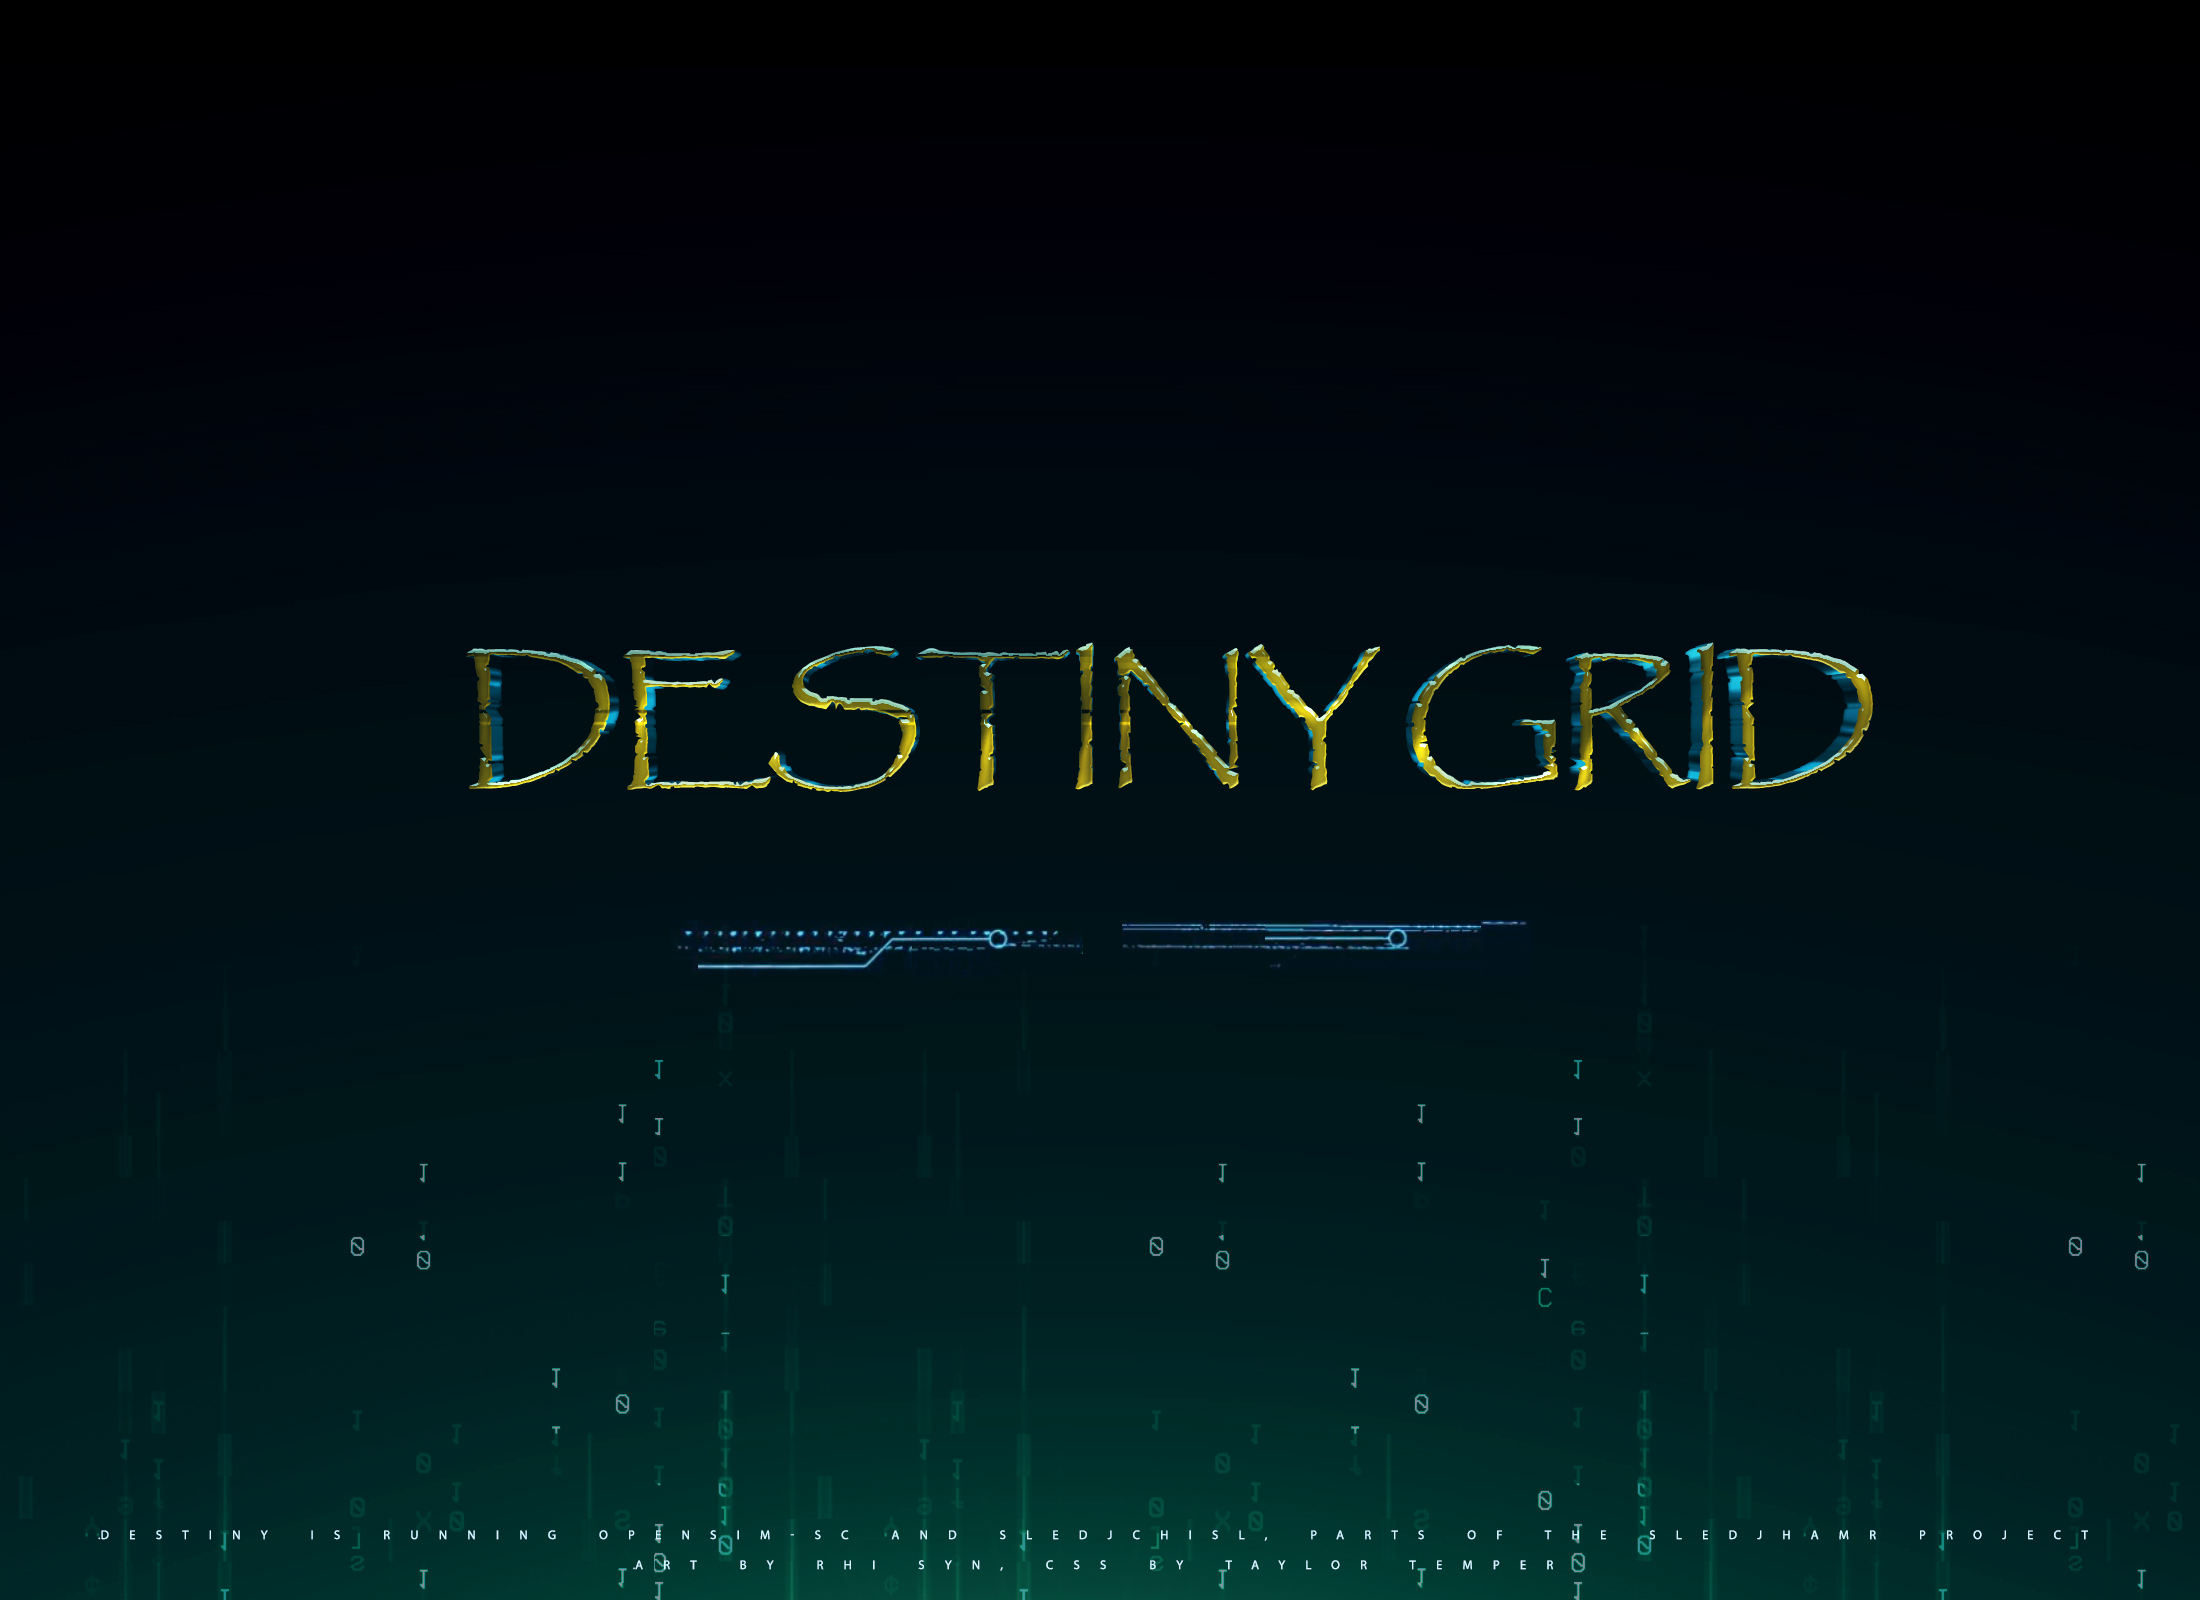 Destiny Grid